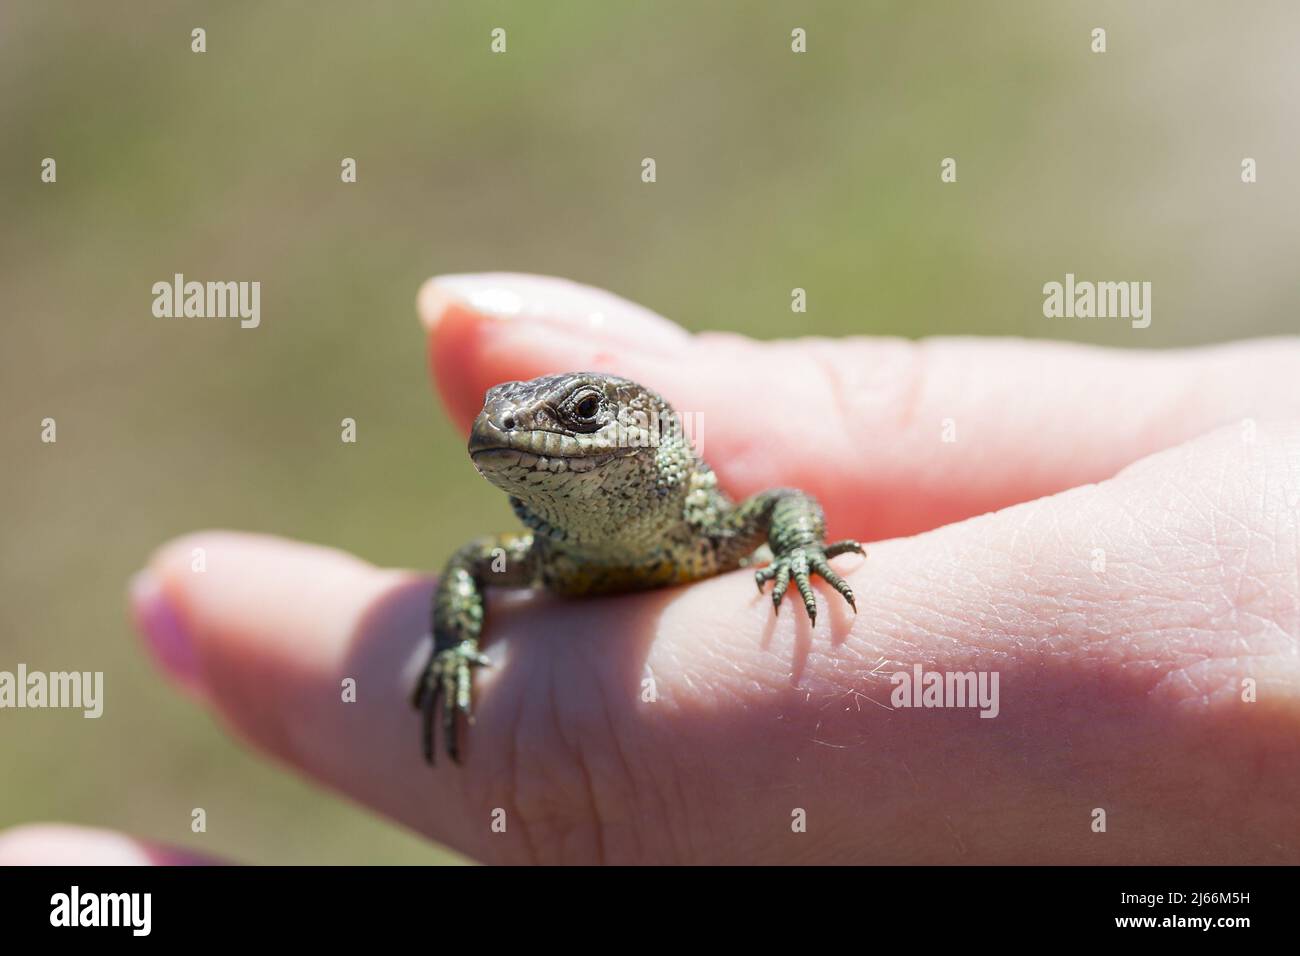 Small nimble lizard in a human hand. Stock Photo